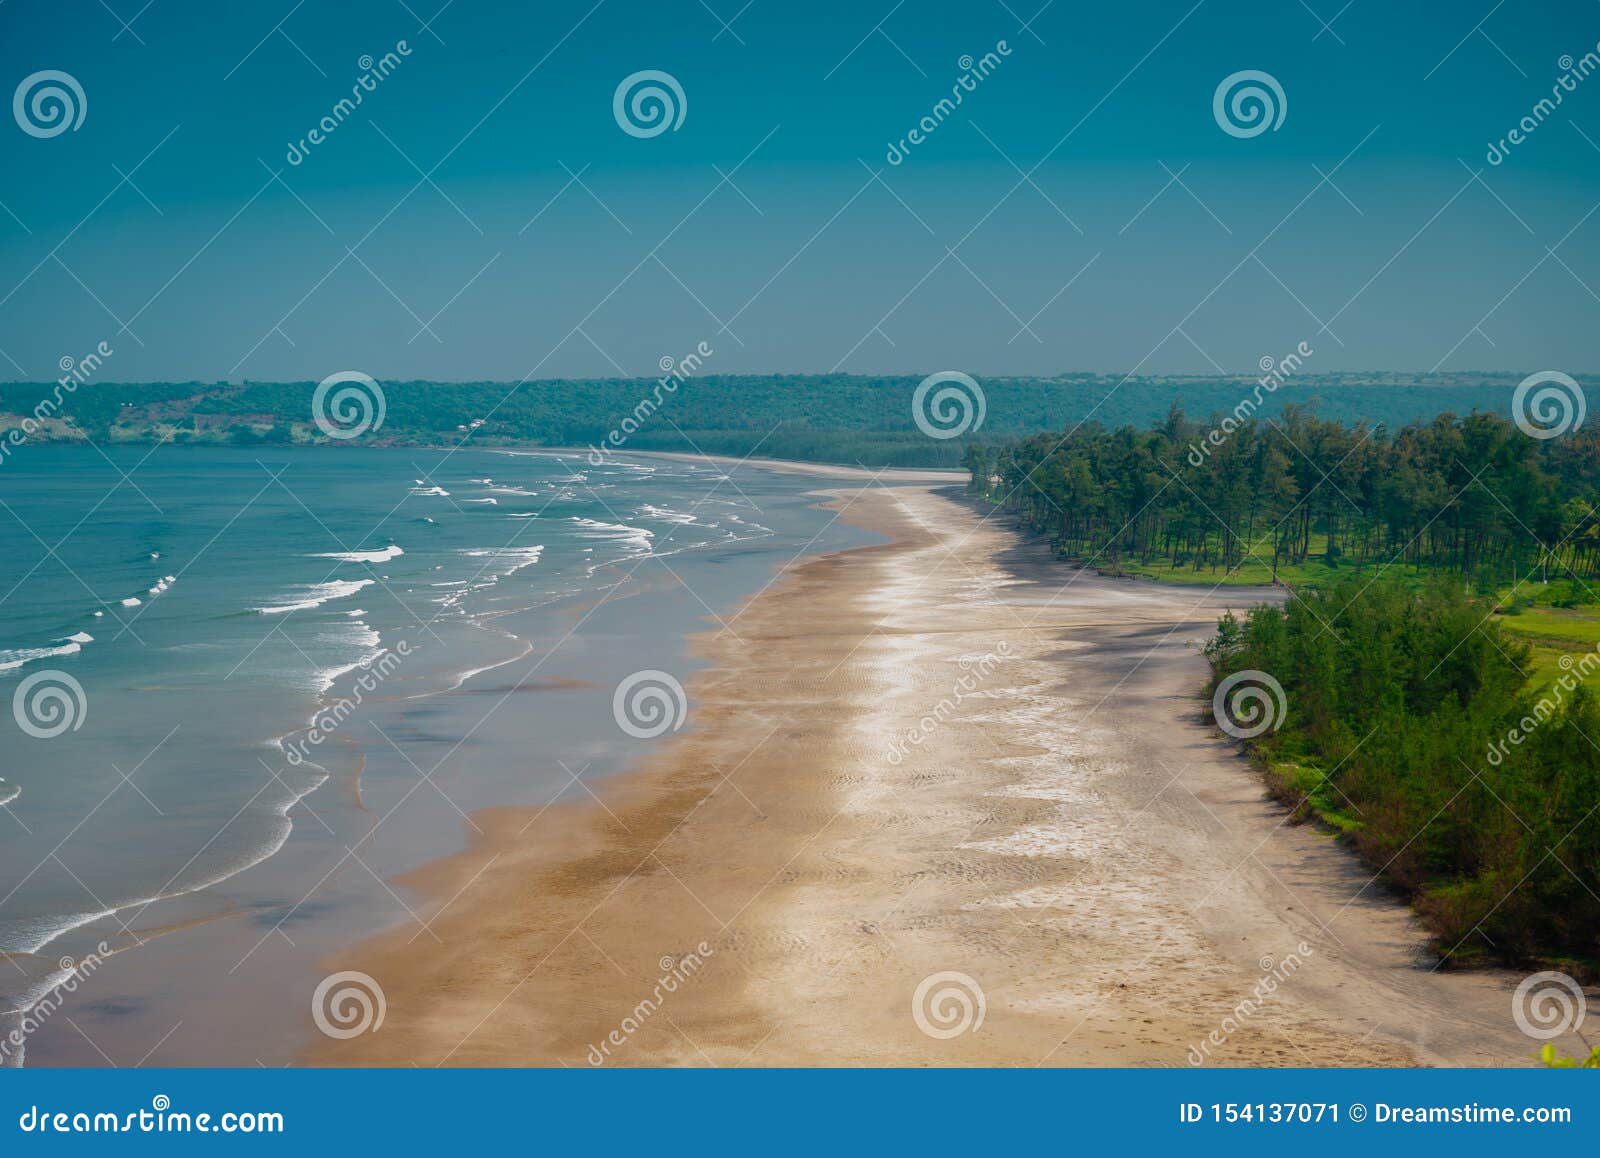 beautiful konkan beach in maharashtra